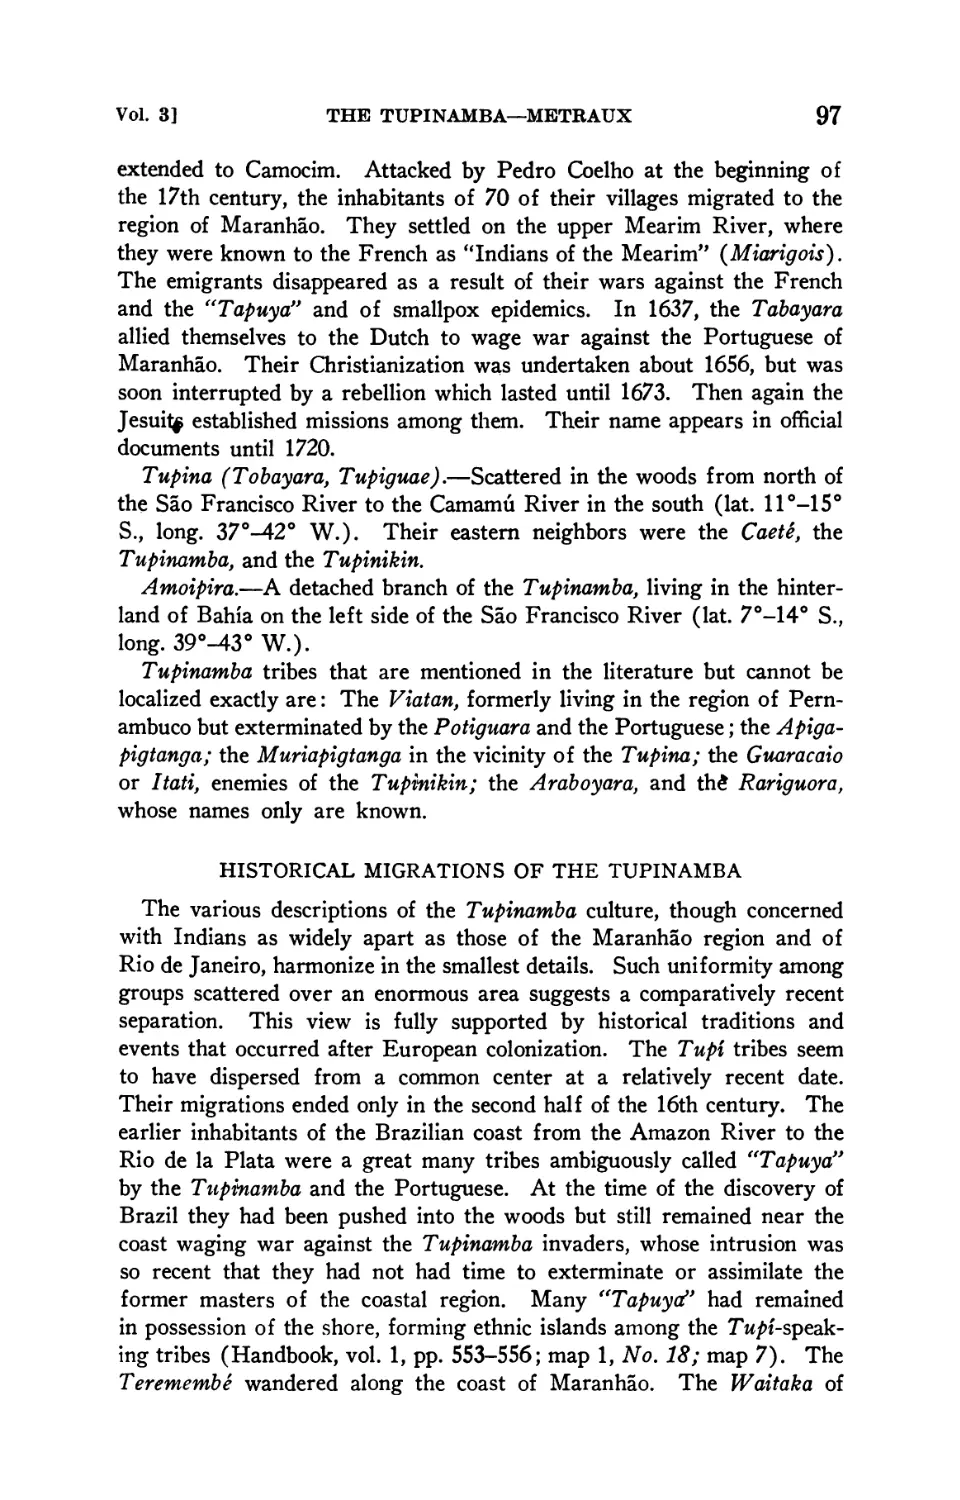 Historical migrations of the Tupinamba